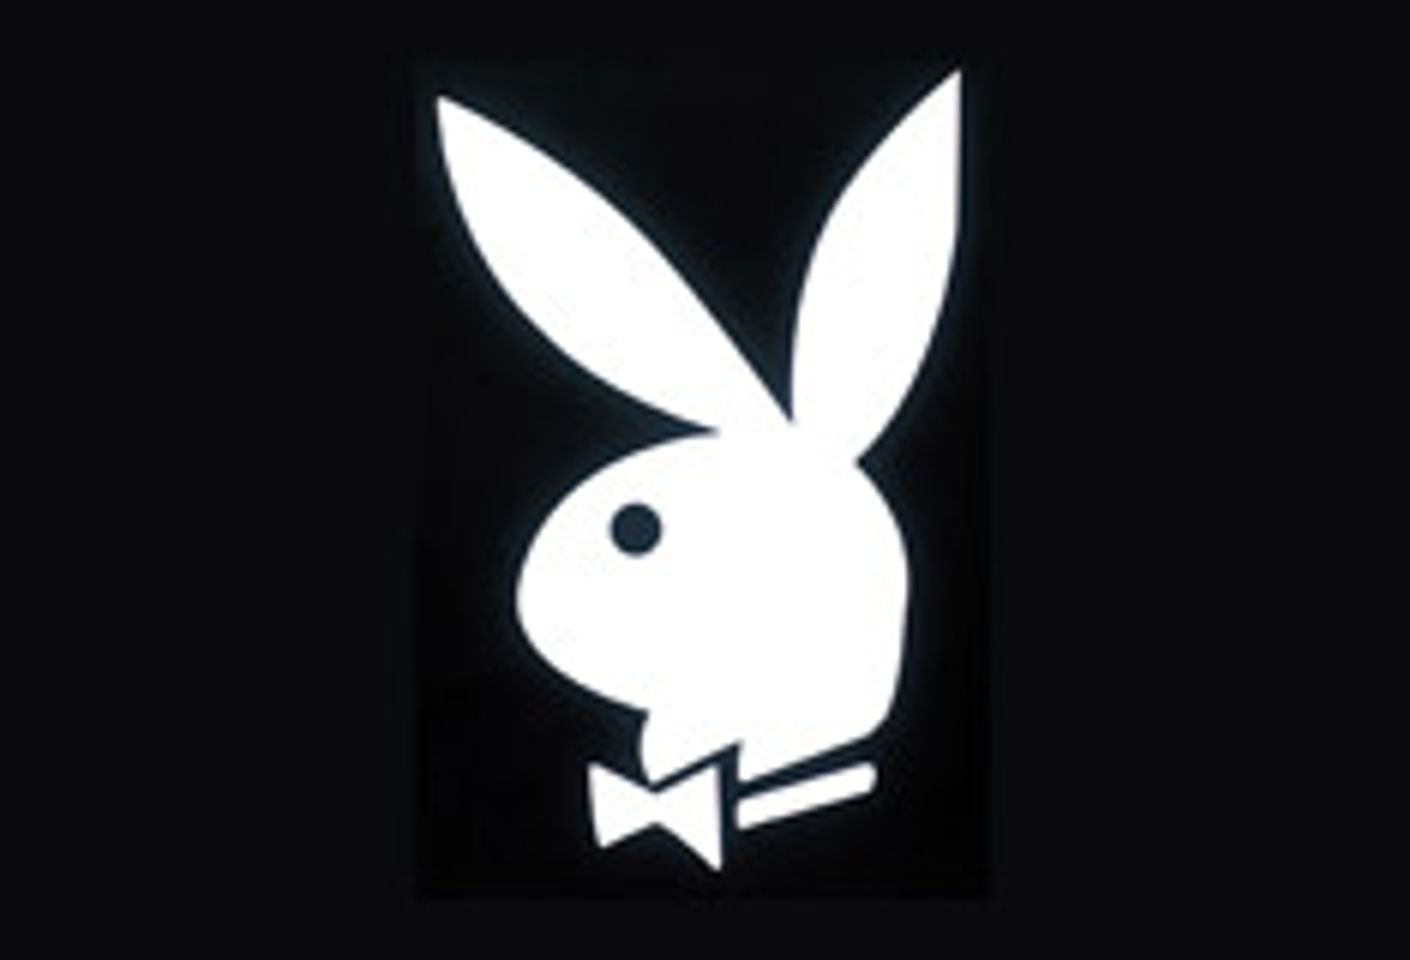 Playboy Reports Revenue Increase, Stock Rises